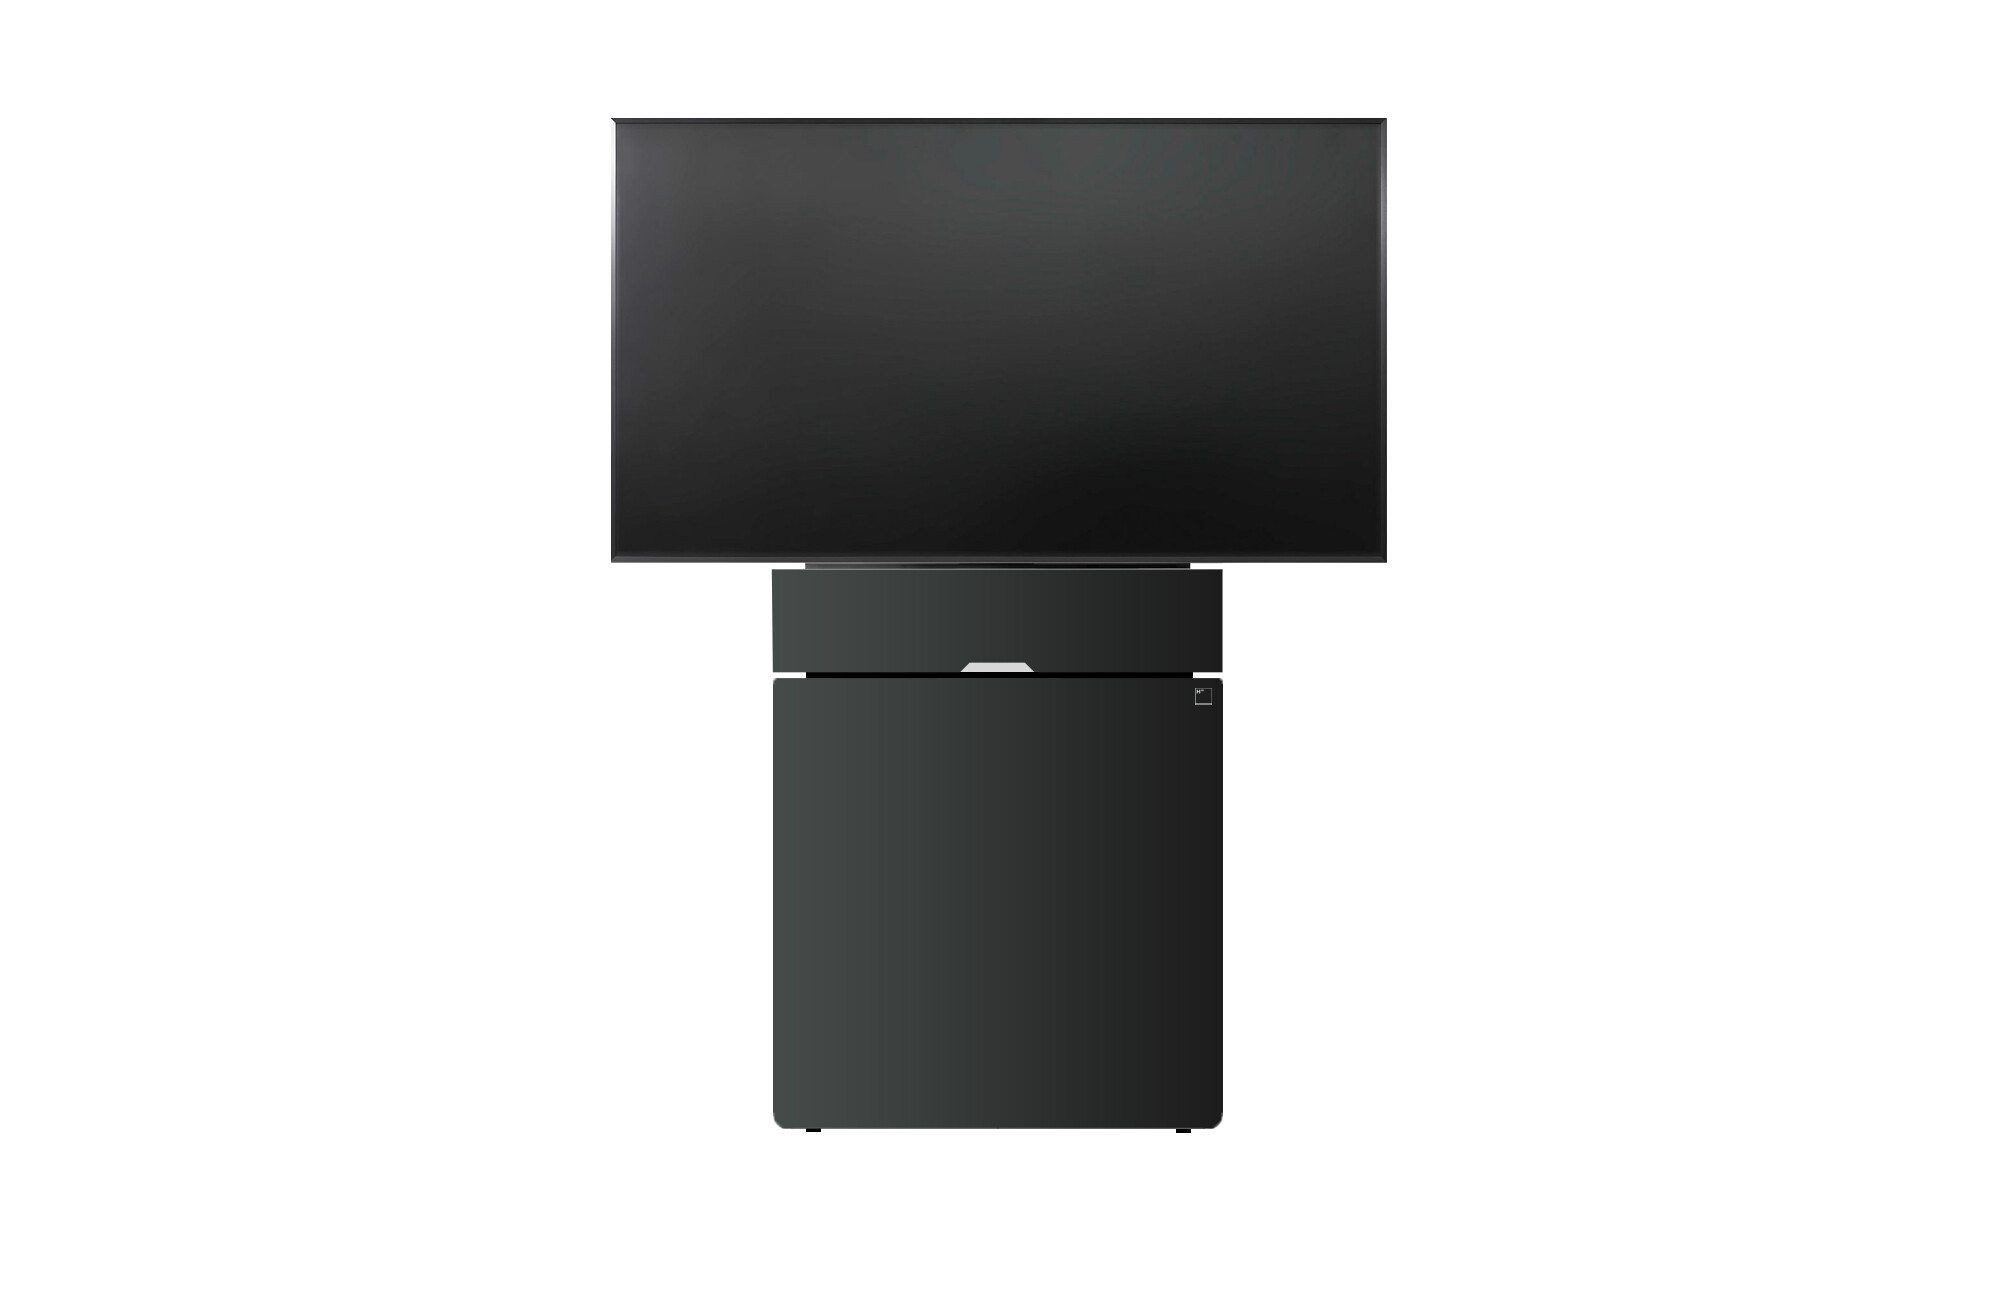 Holzmedia-W6-Displaystele-M-Front-90cm-Blende-fur-Lenovo-ThinkSmart-schwarz